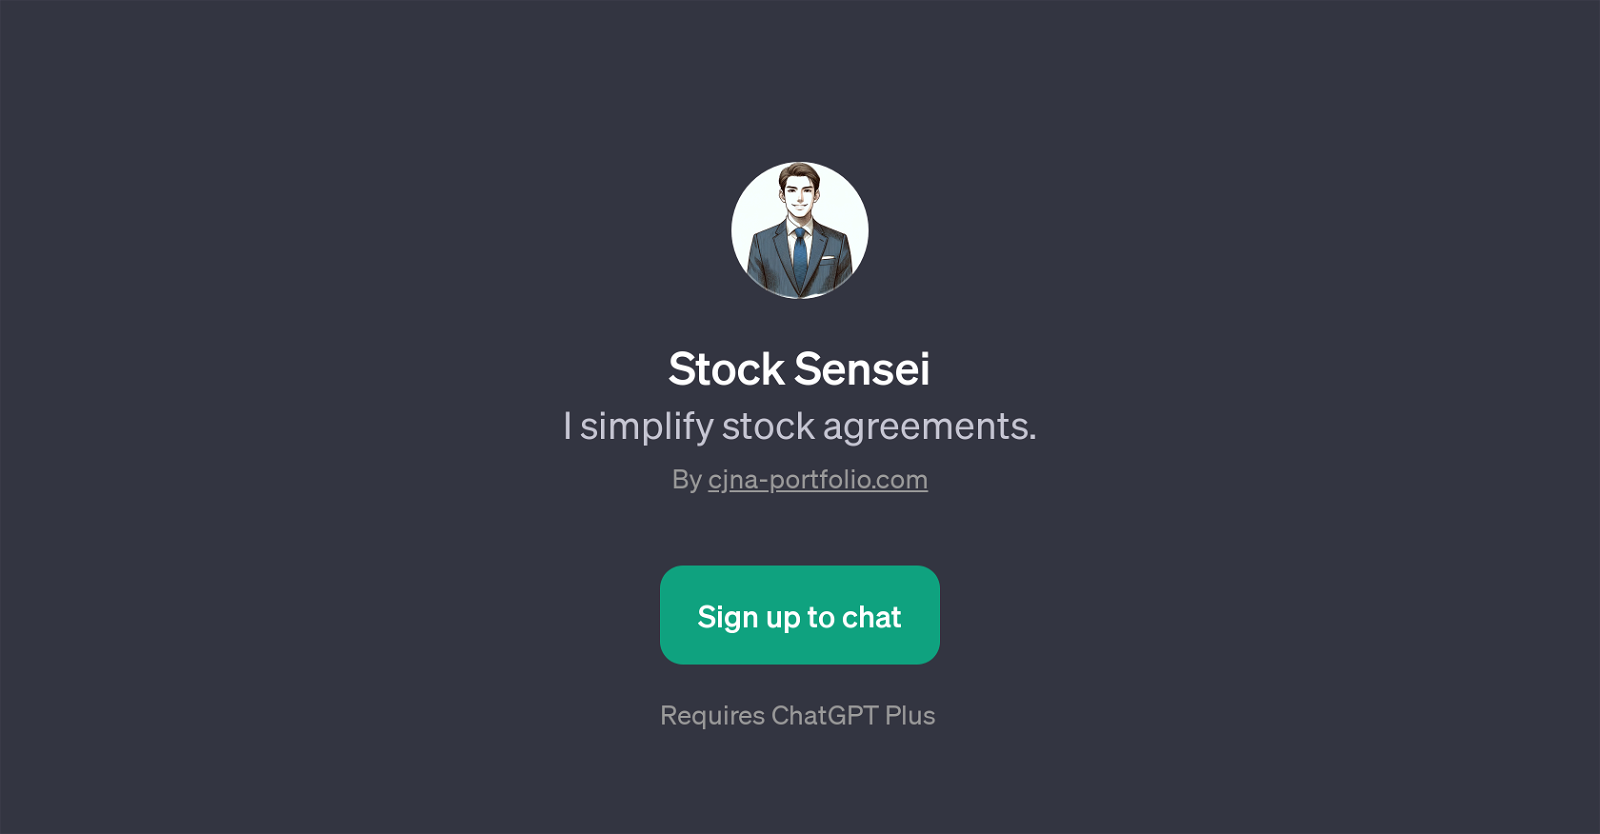 Stock Sensei website